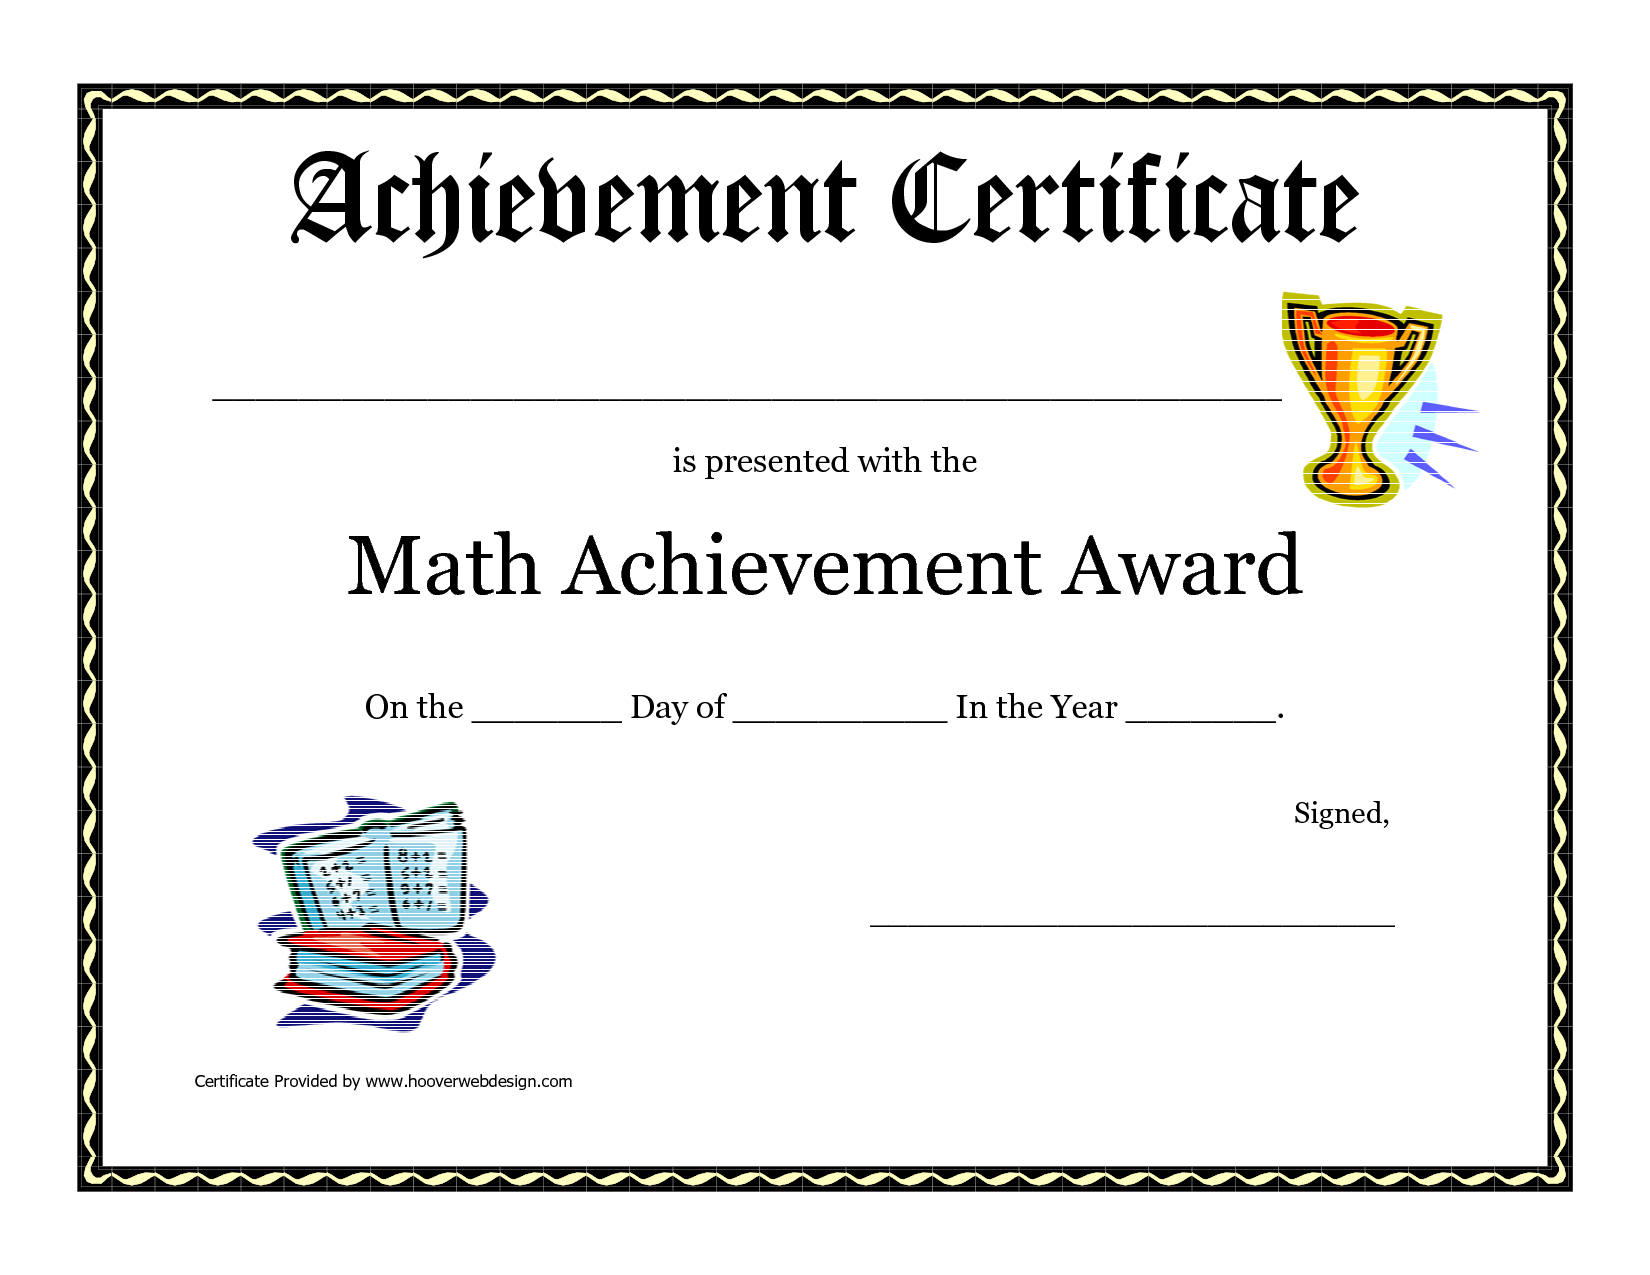 Math Achievement Award Printable Certificate Pdf | Award With Regard To Certificate Of Achievement Template For Kids